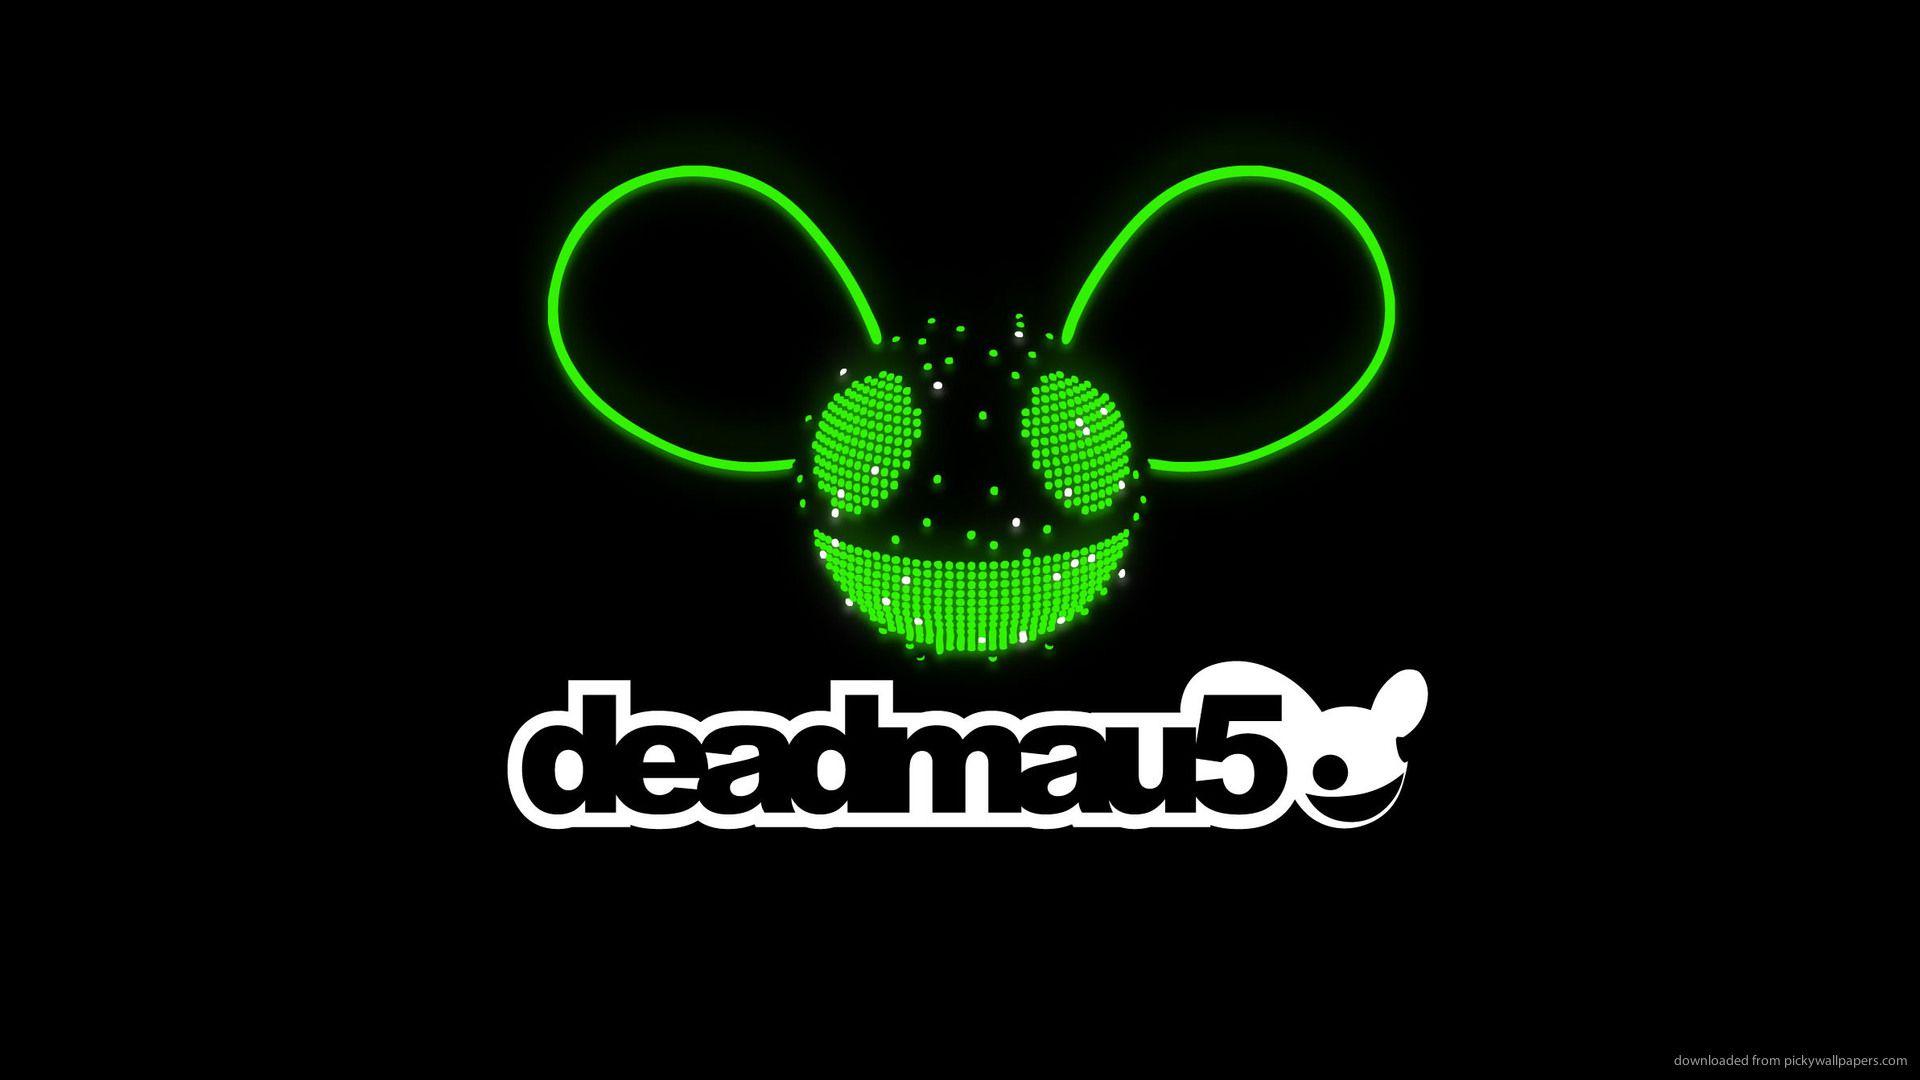 Deadmau5 Logo - Deadmau5 Logo HD Wallpaper, Background Image